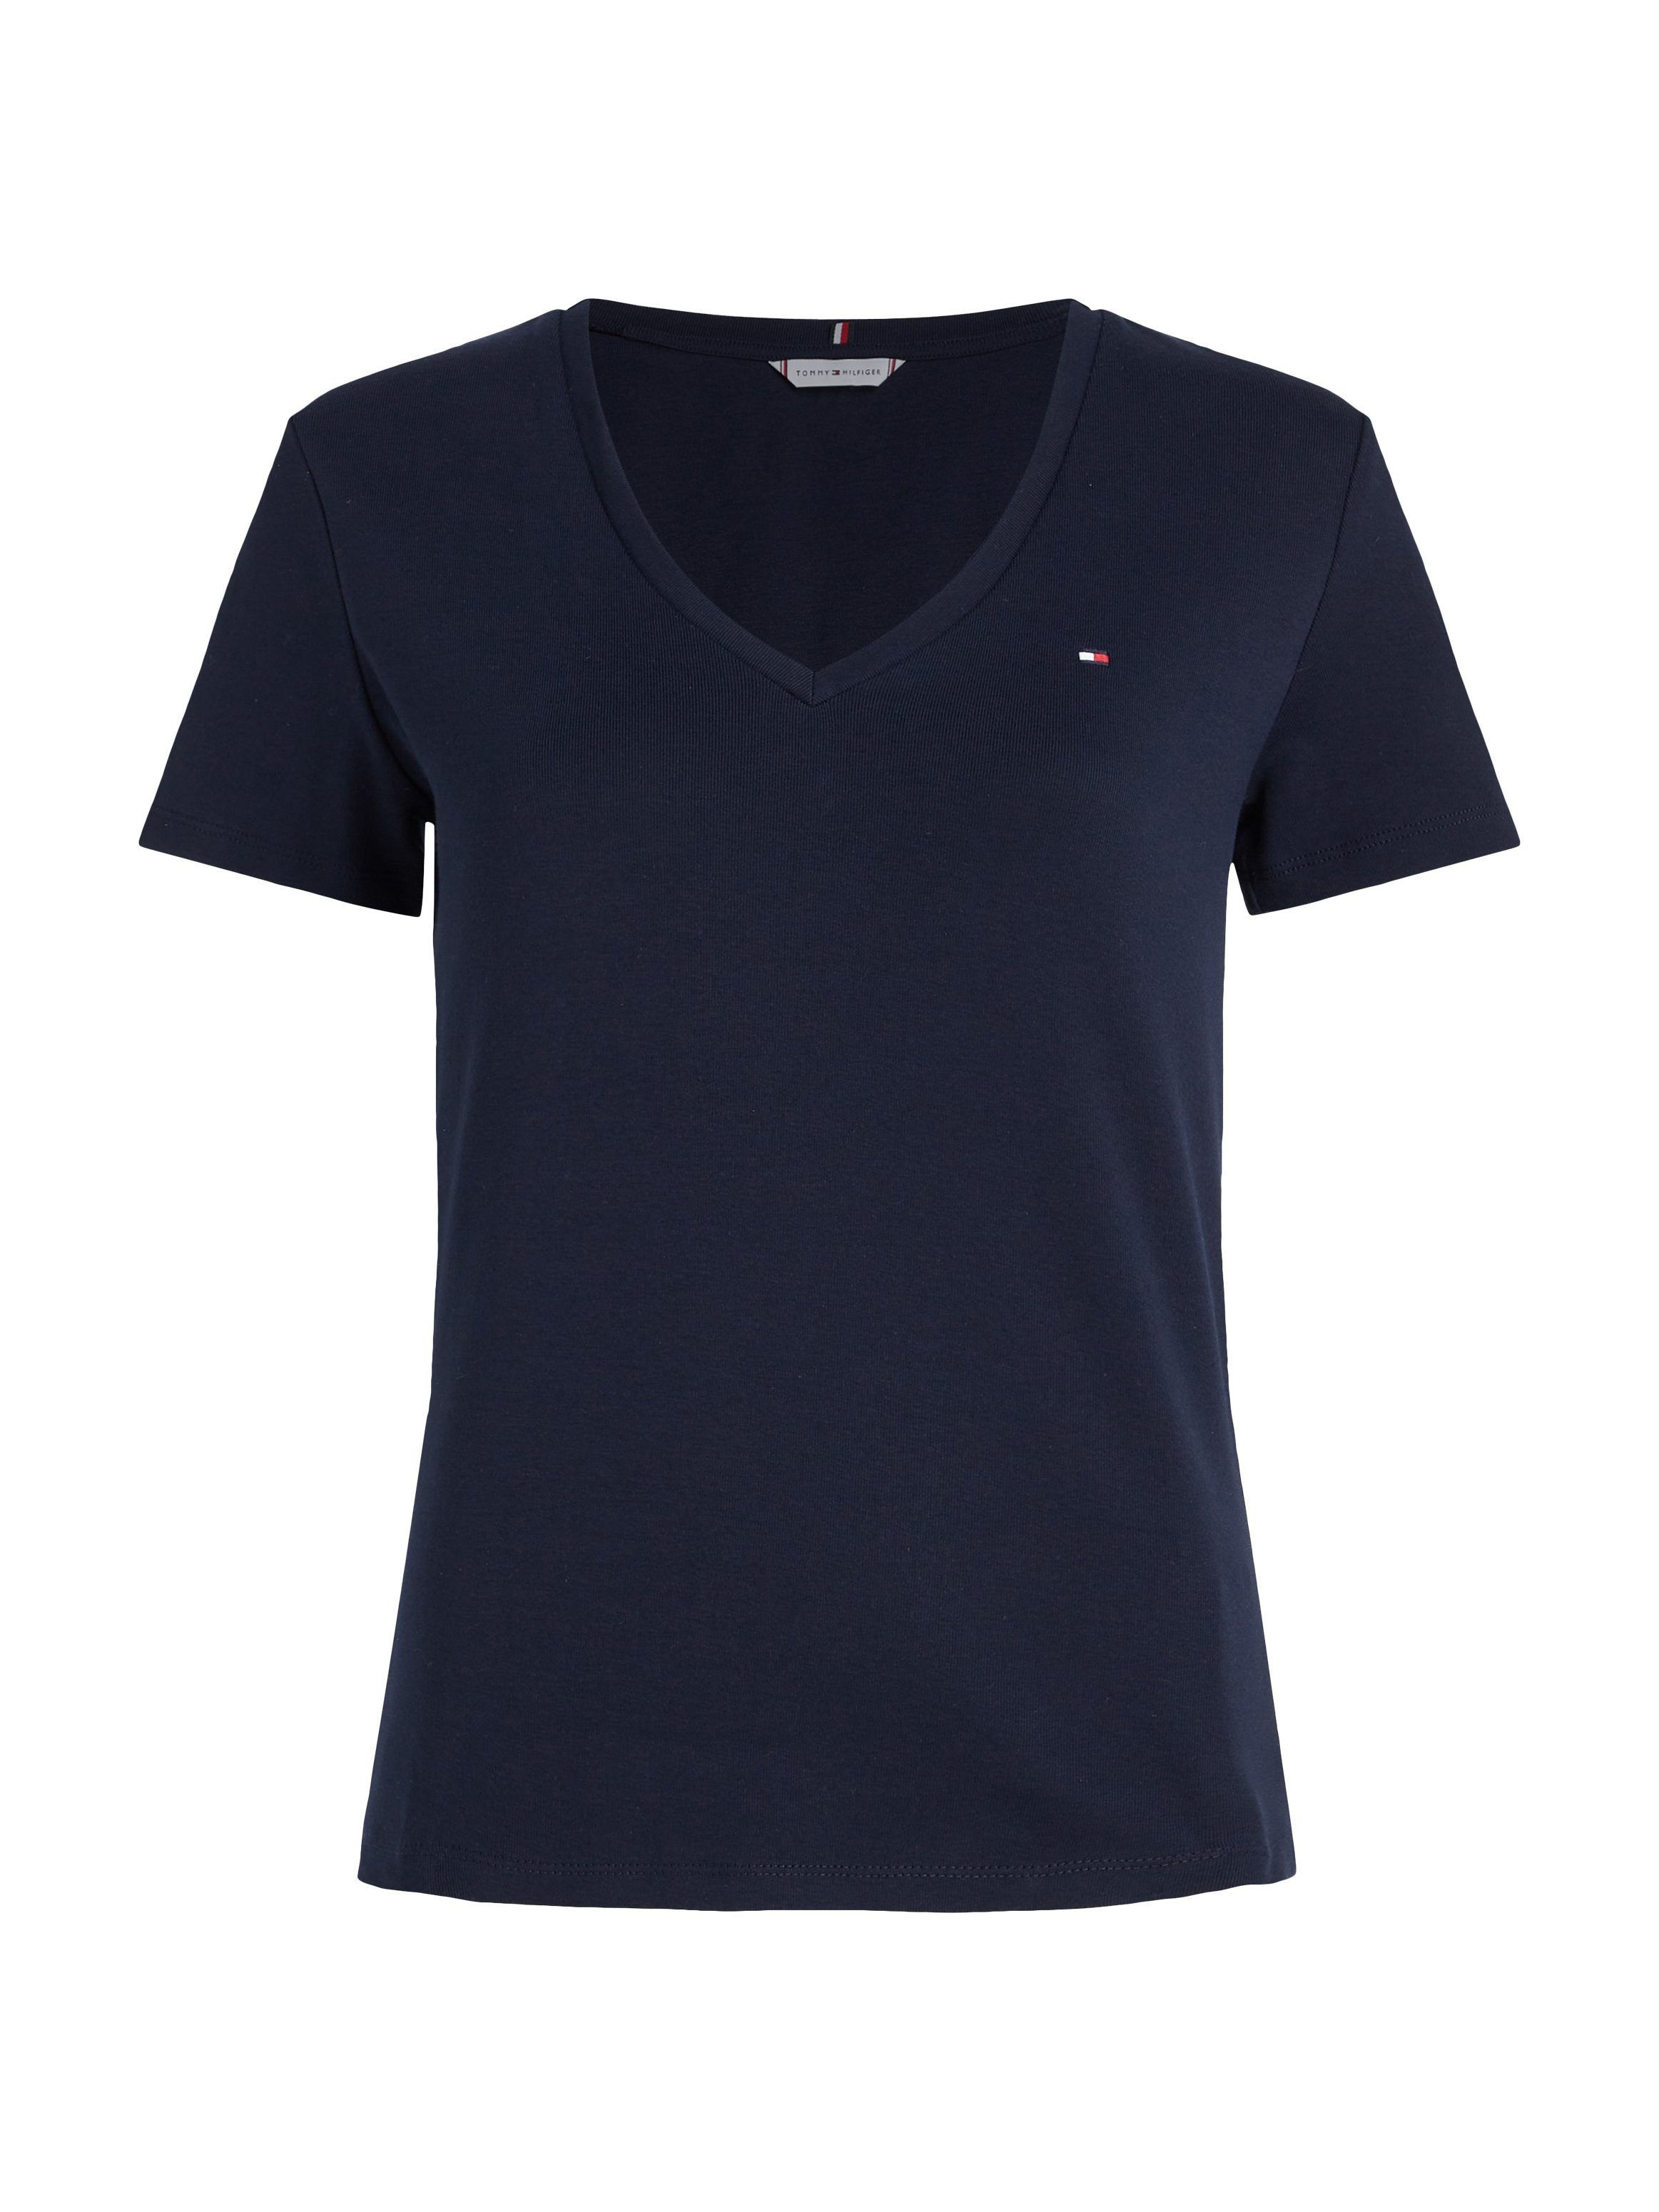 Tommy Hilfiger T-Shirt SLIM CODY Logostickerei V-NECK dezenter mit SS dunkelblau RIB